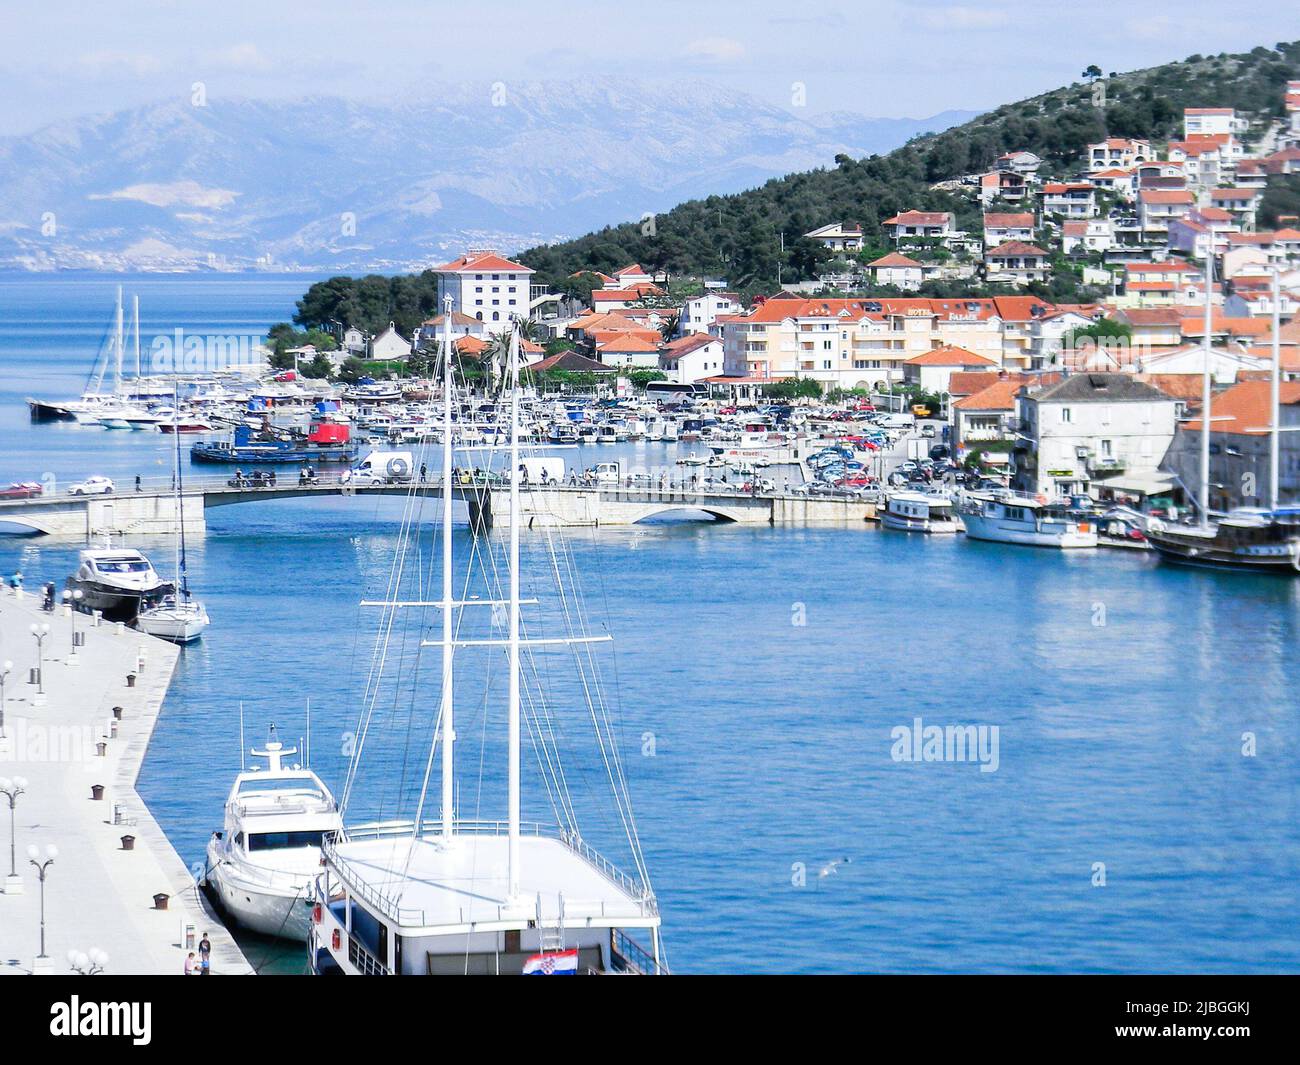 Harbor in Trogir, Croatia. Trogir is on small island between the Croatian mainland & the island of Čiovo. It lies 27 kim (17 miles) west of of Split Stock Photo